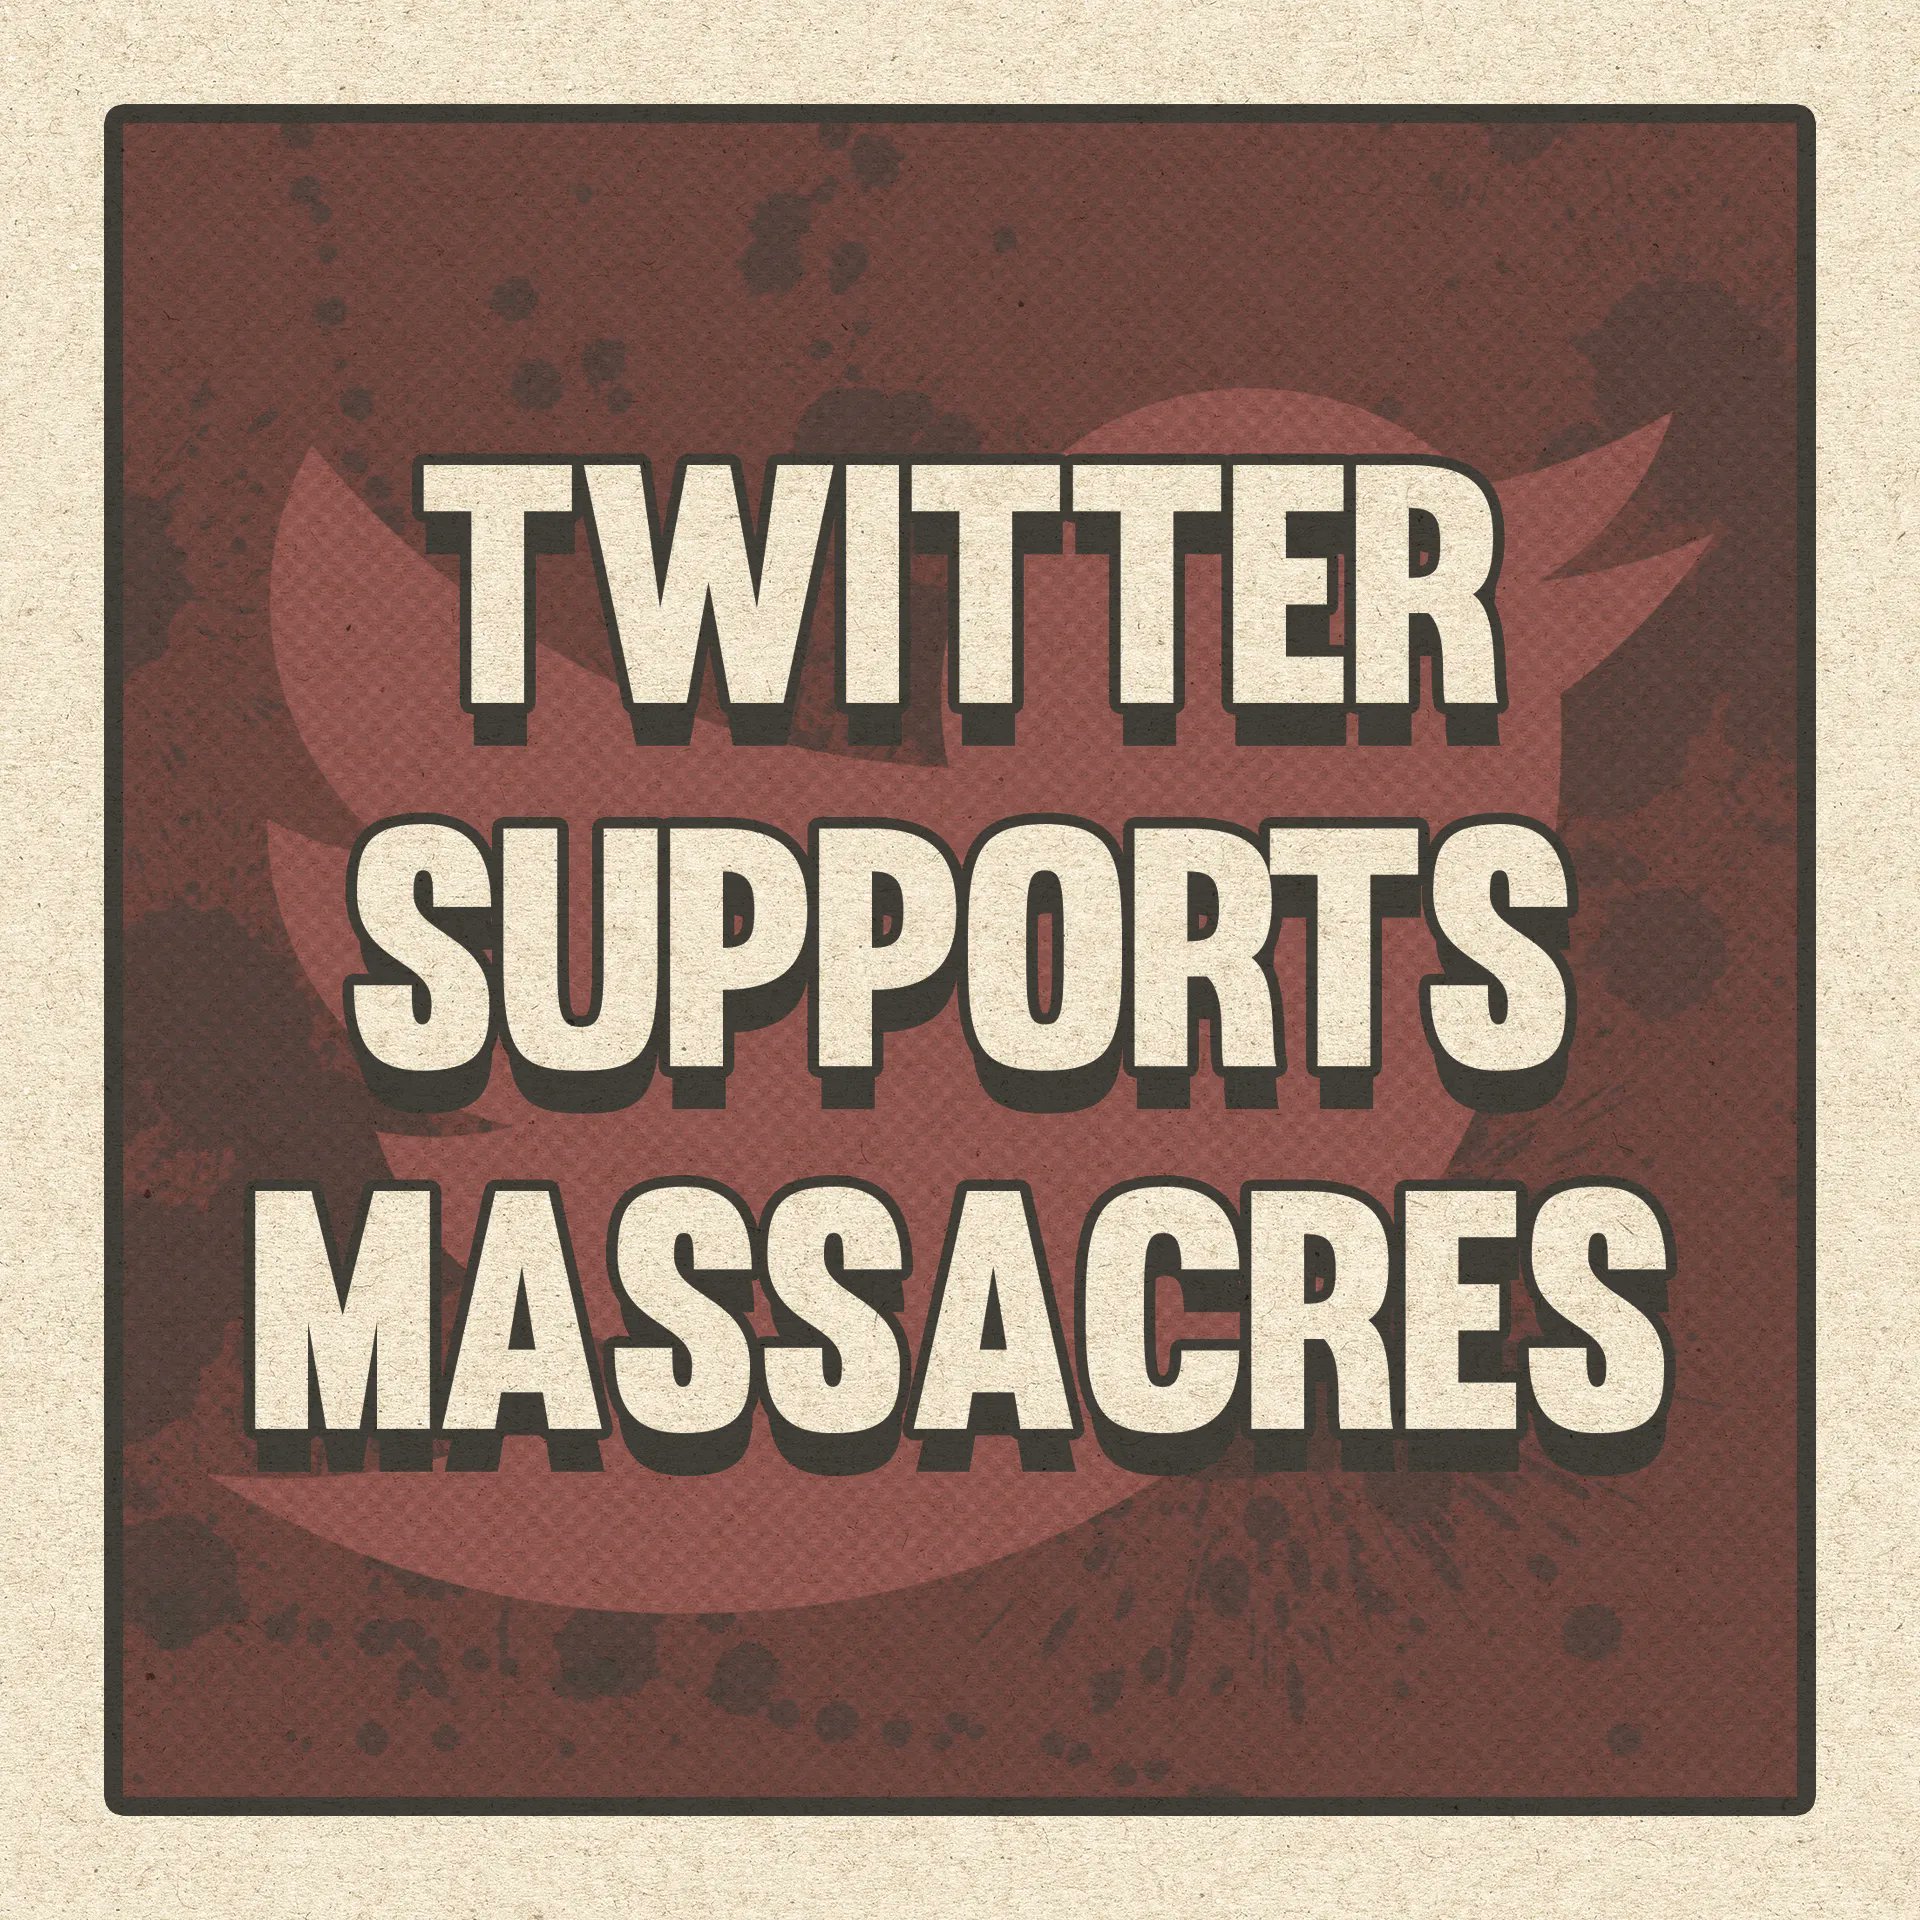 Twitter supports massacres